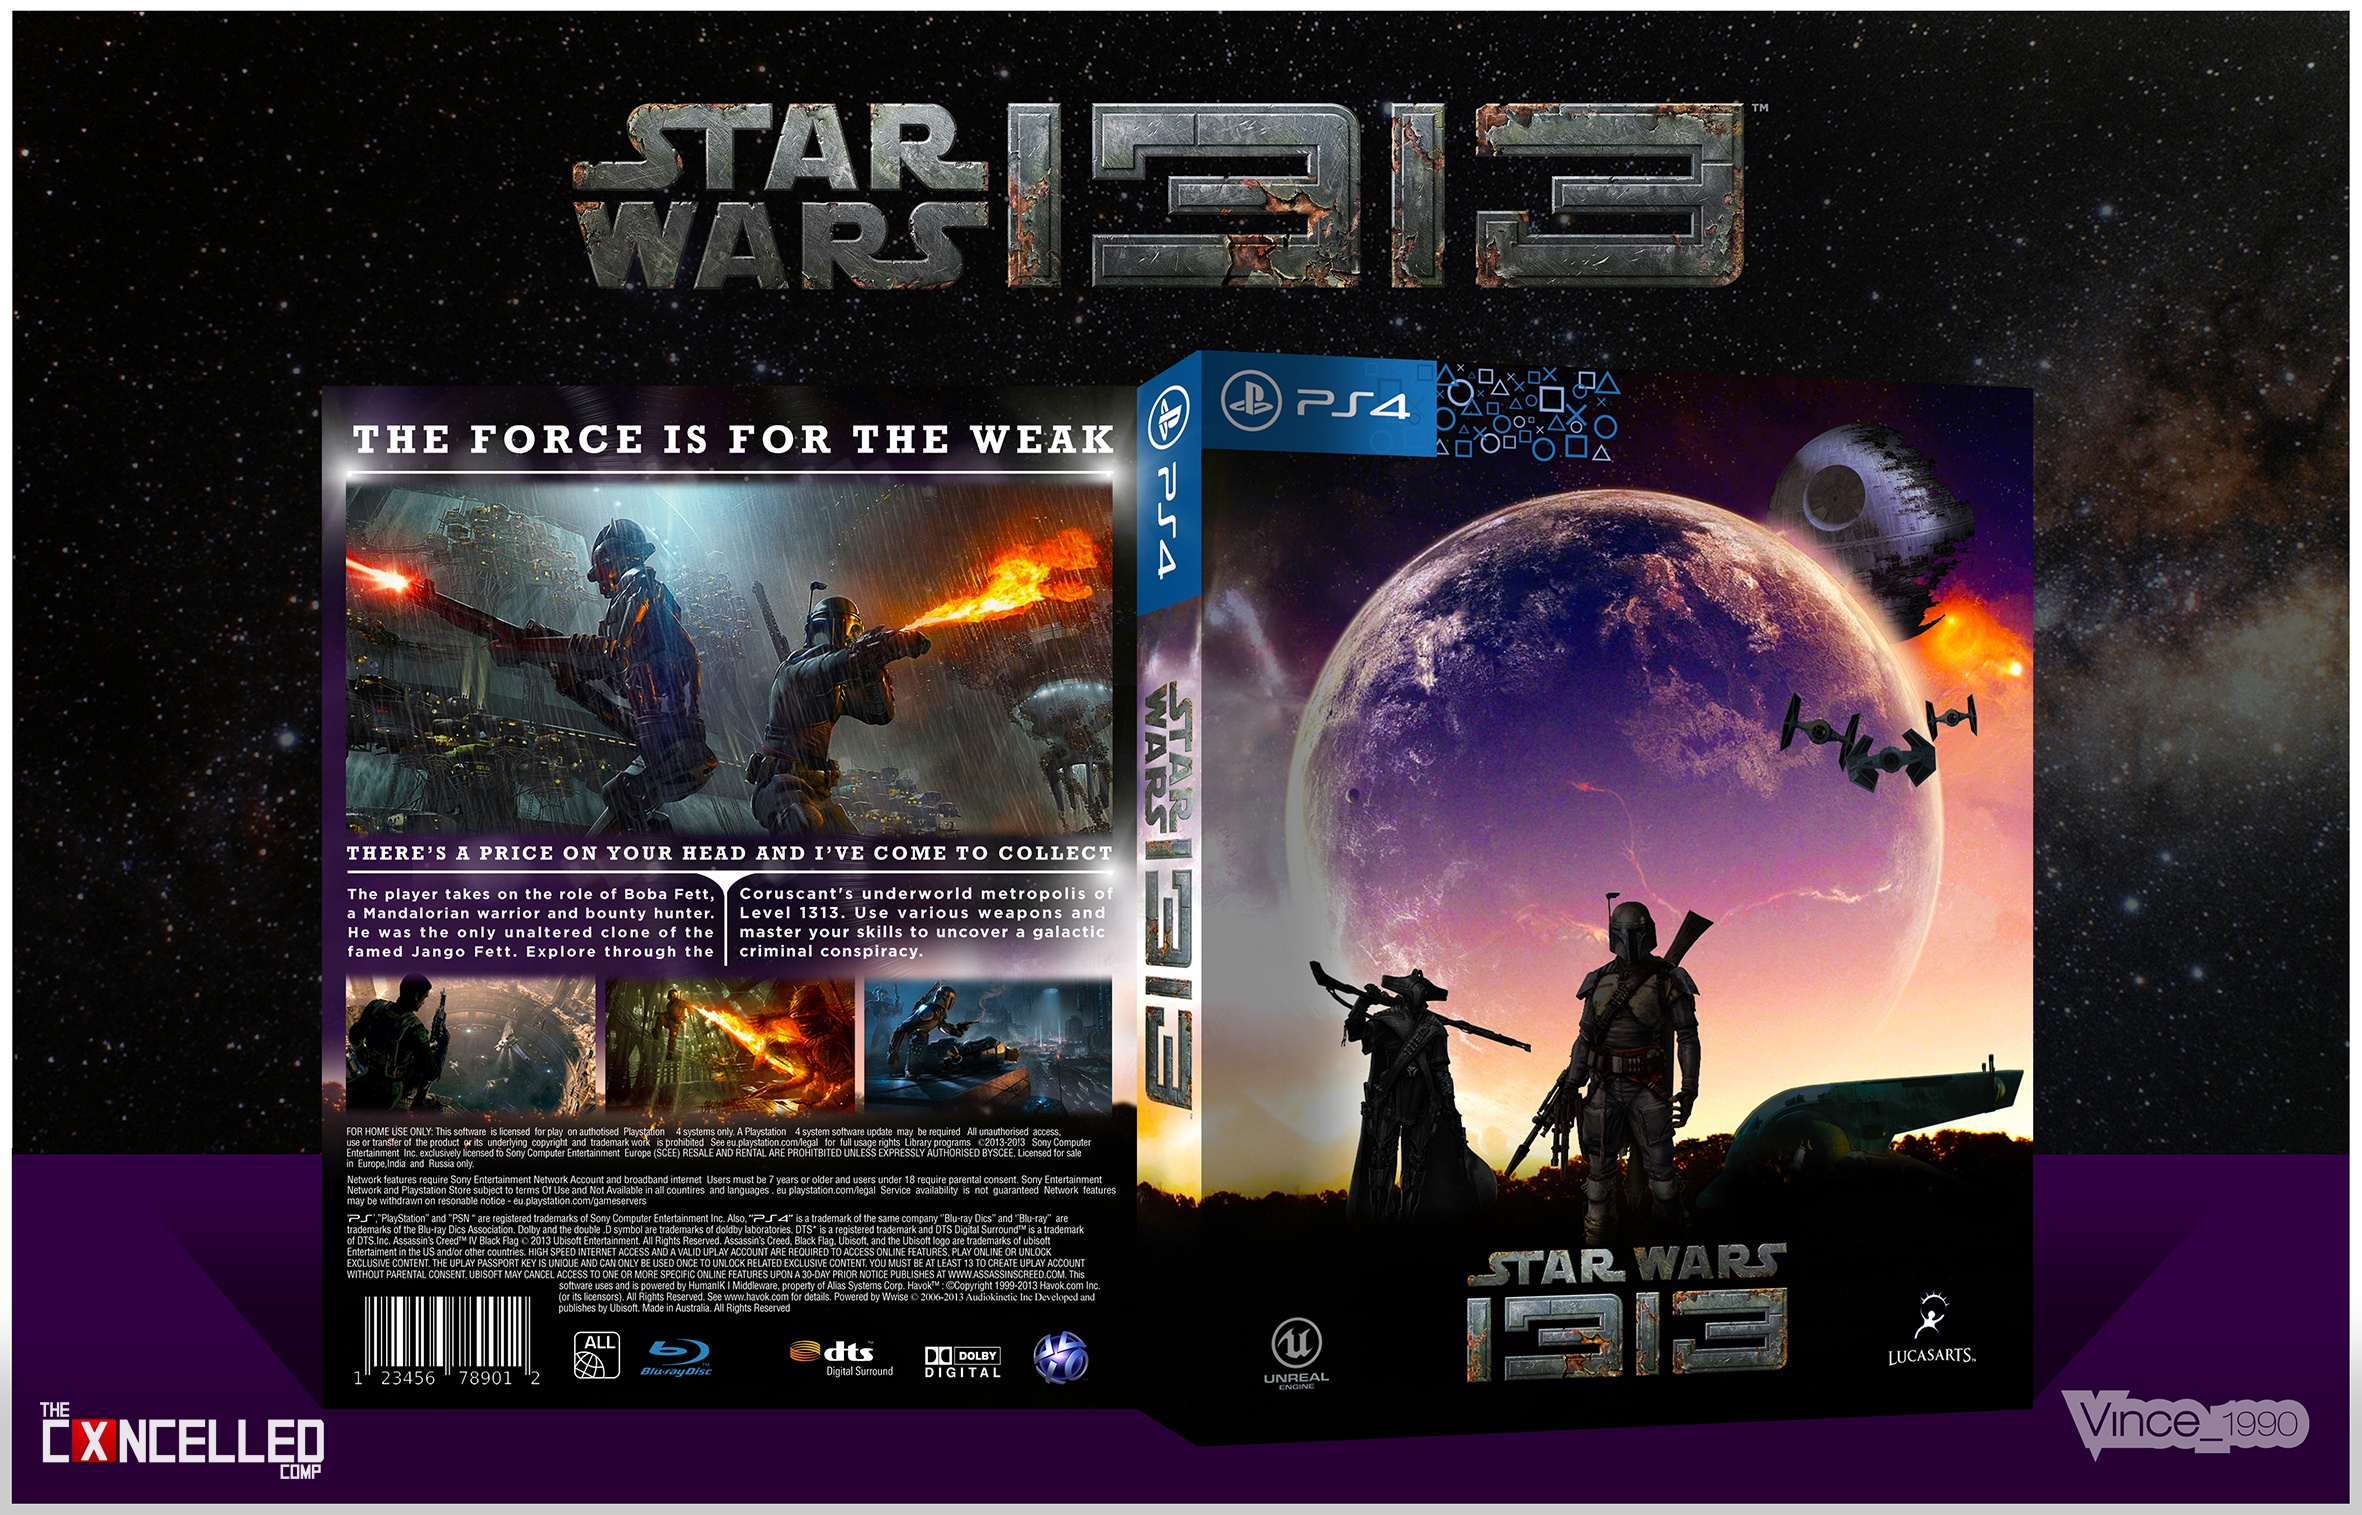 Star Wars 1313 box cover